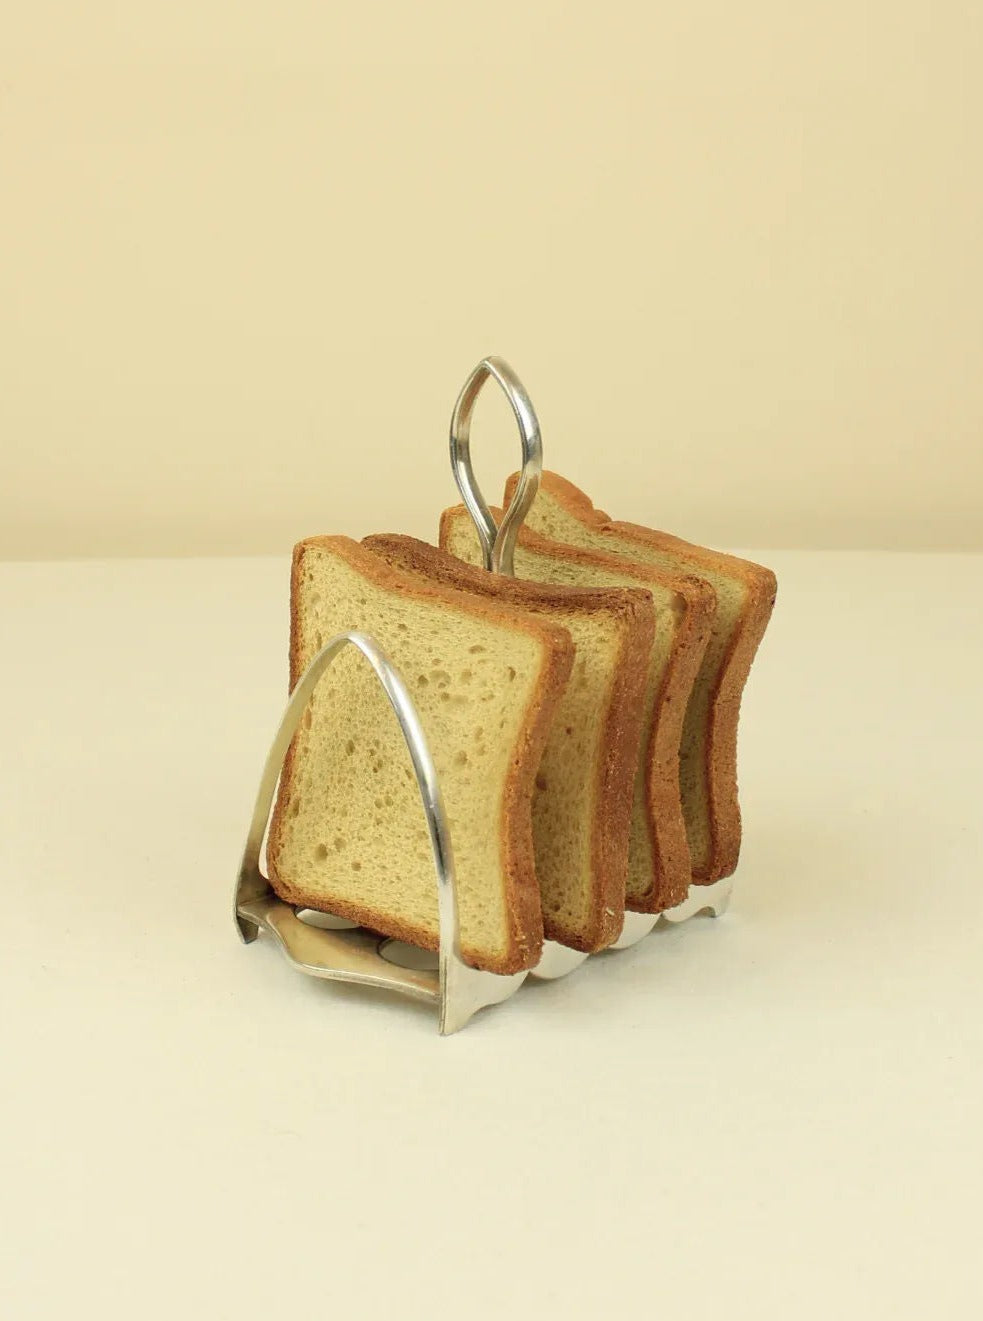 English Toast Holder